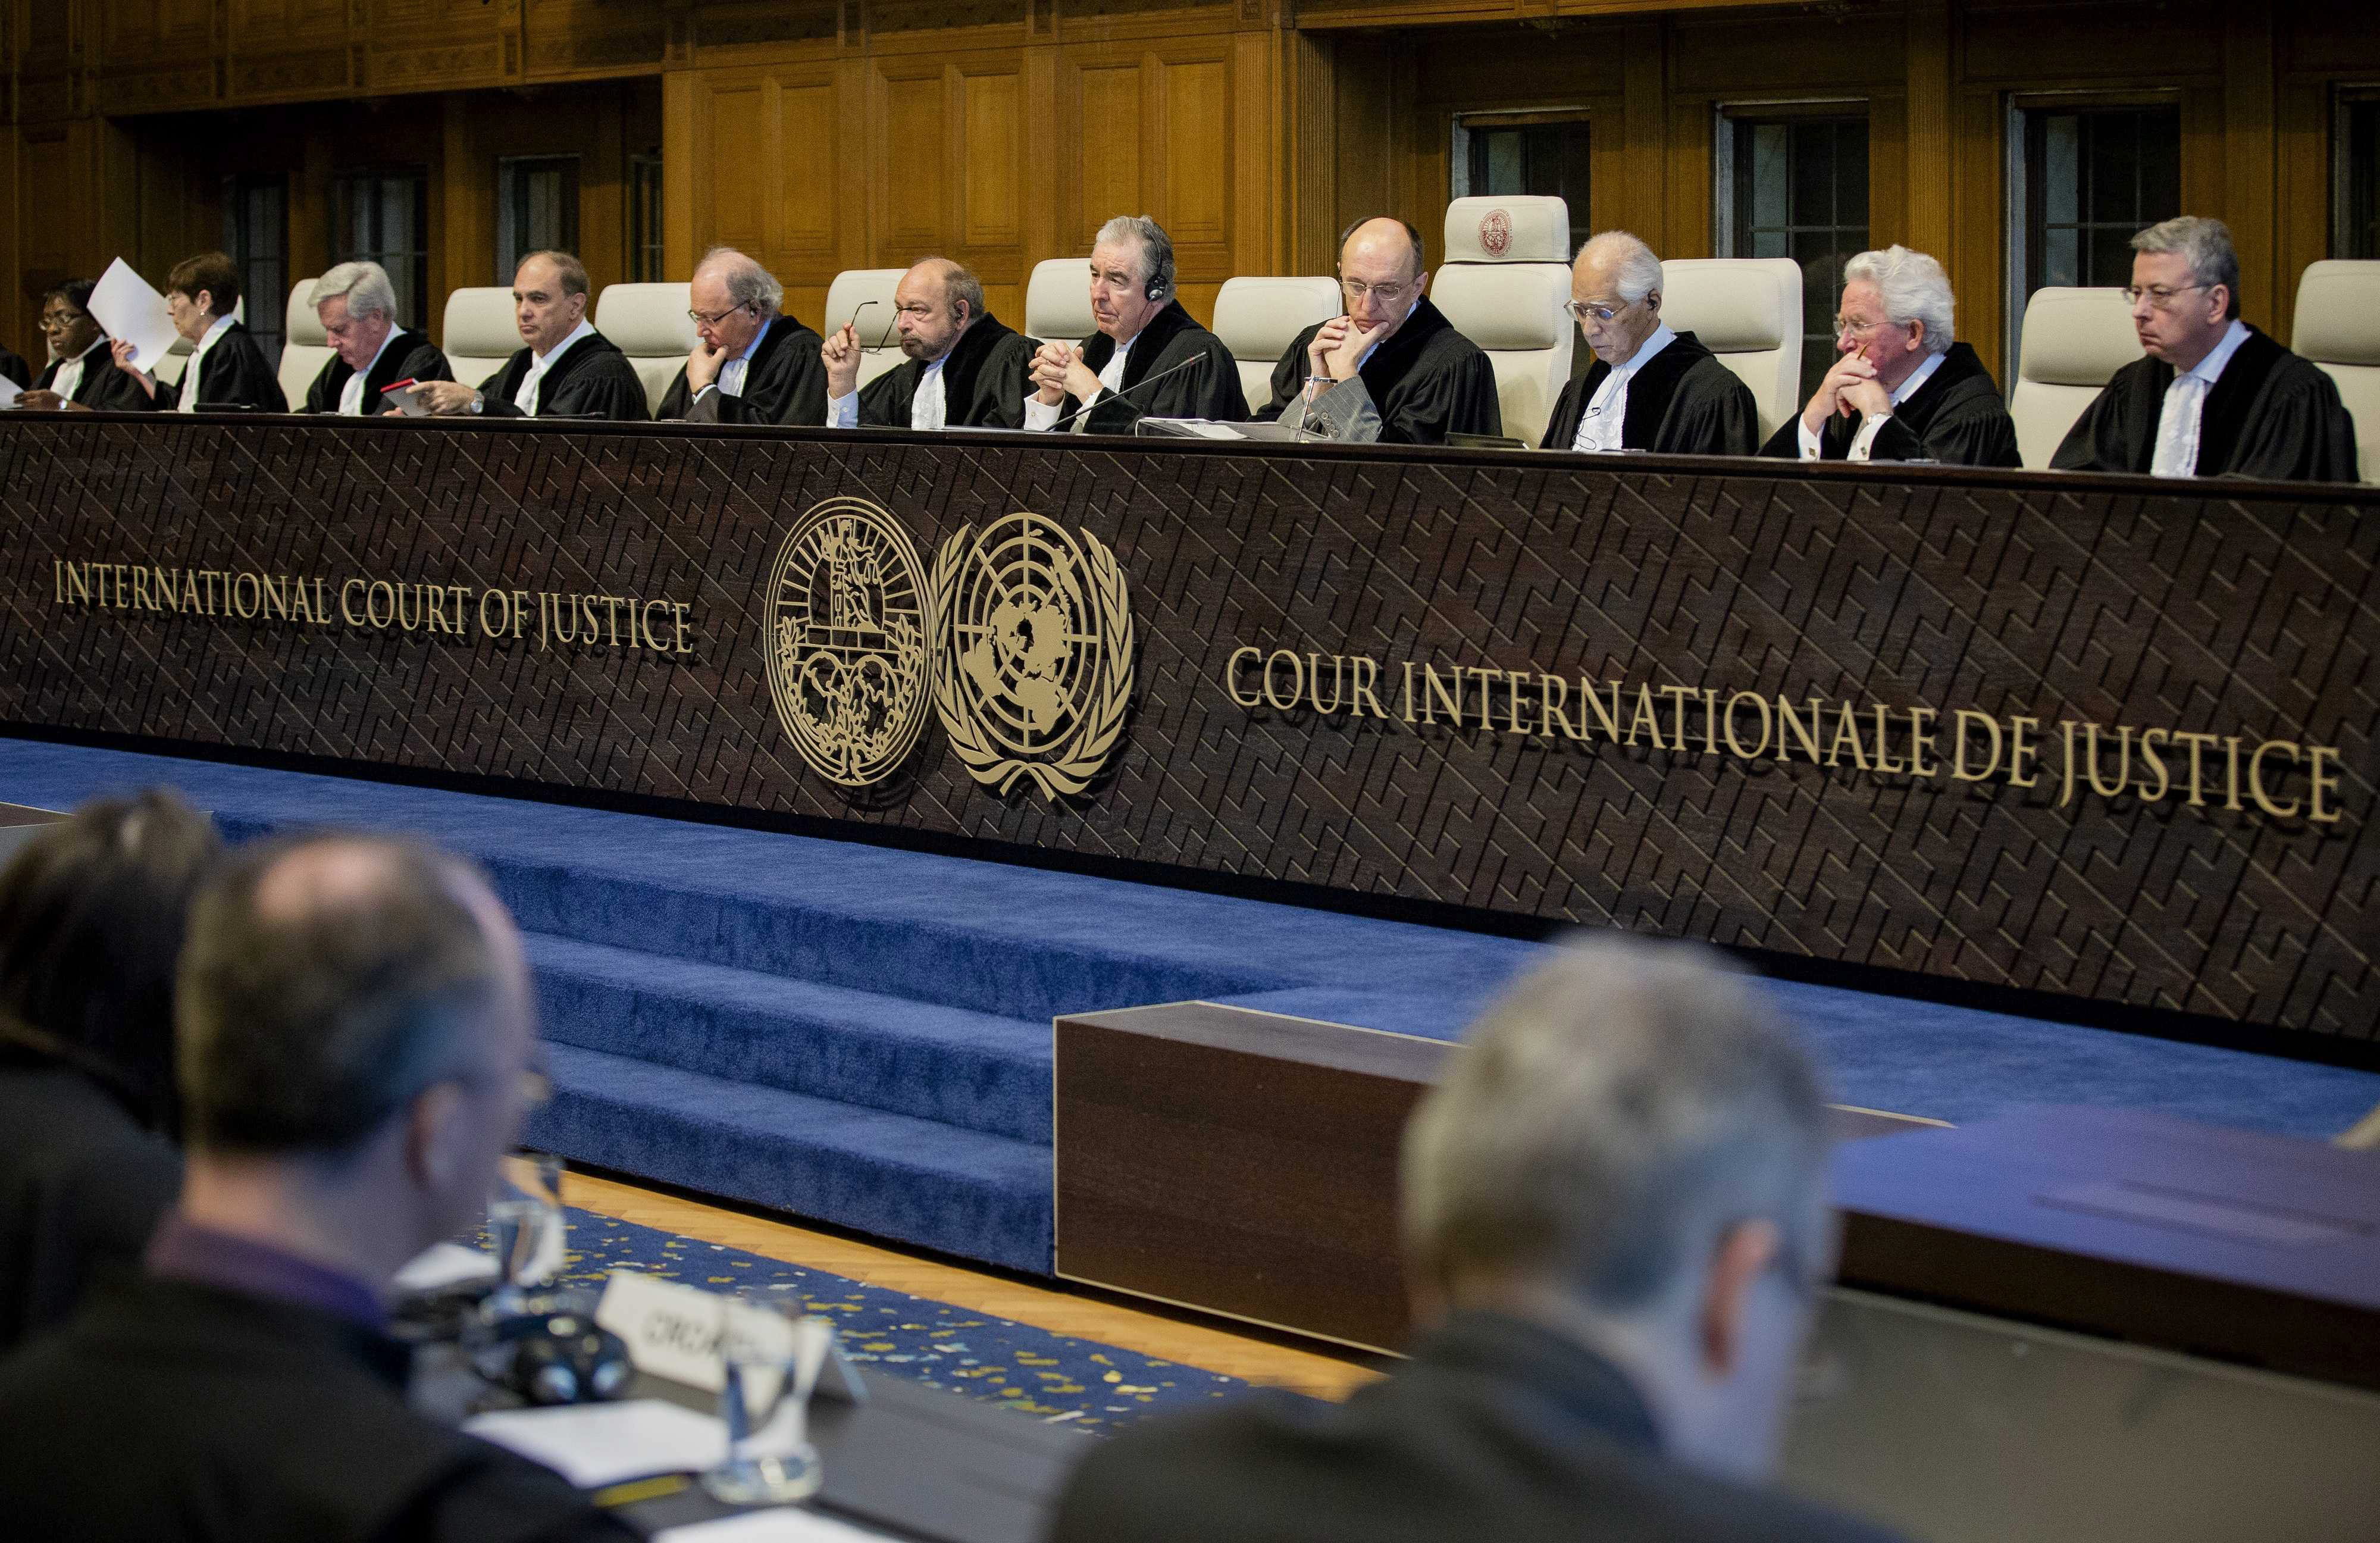 Суд международного трибунала. Международный трибунал в Гааге. Международный Уголовный трибунал (Гаага). Международный суд ООН. Суд ООН В Гааге.